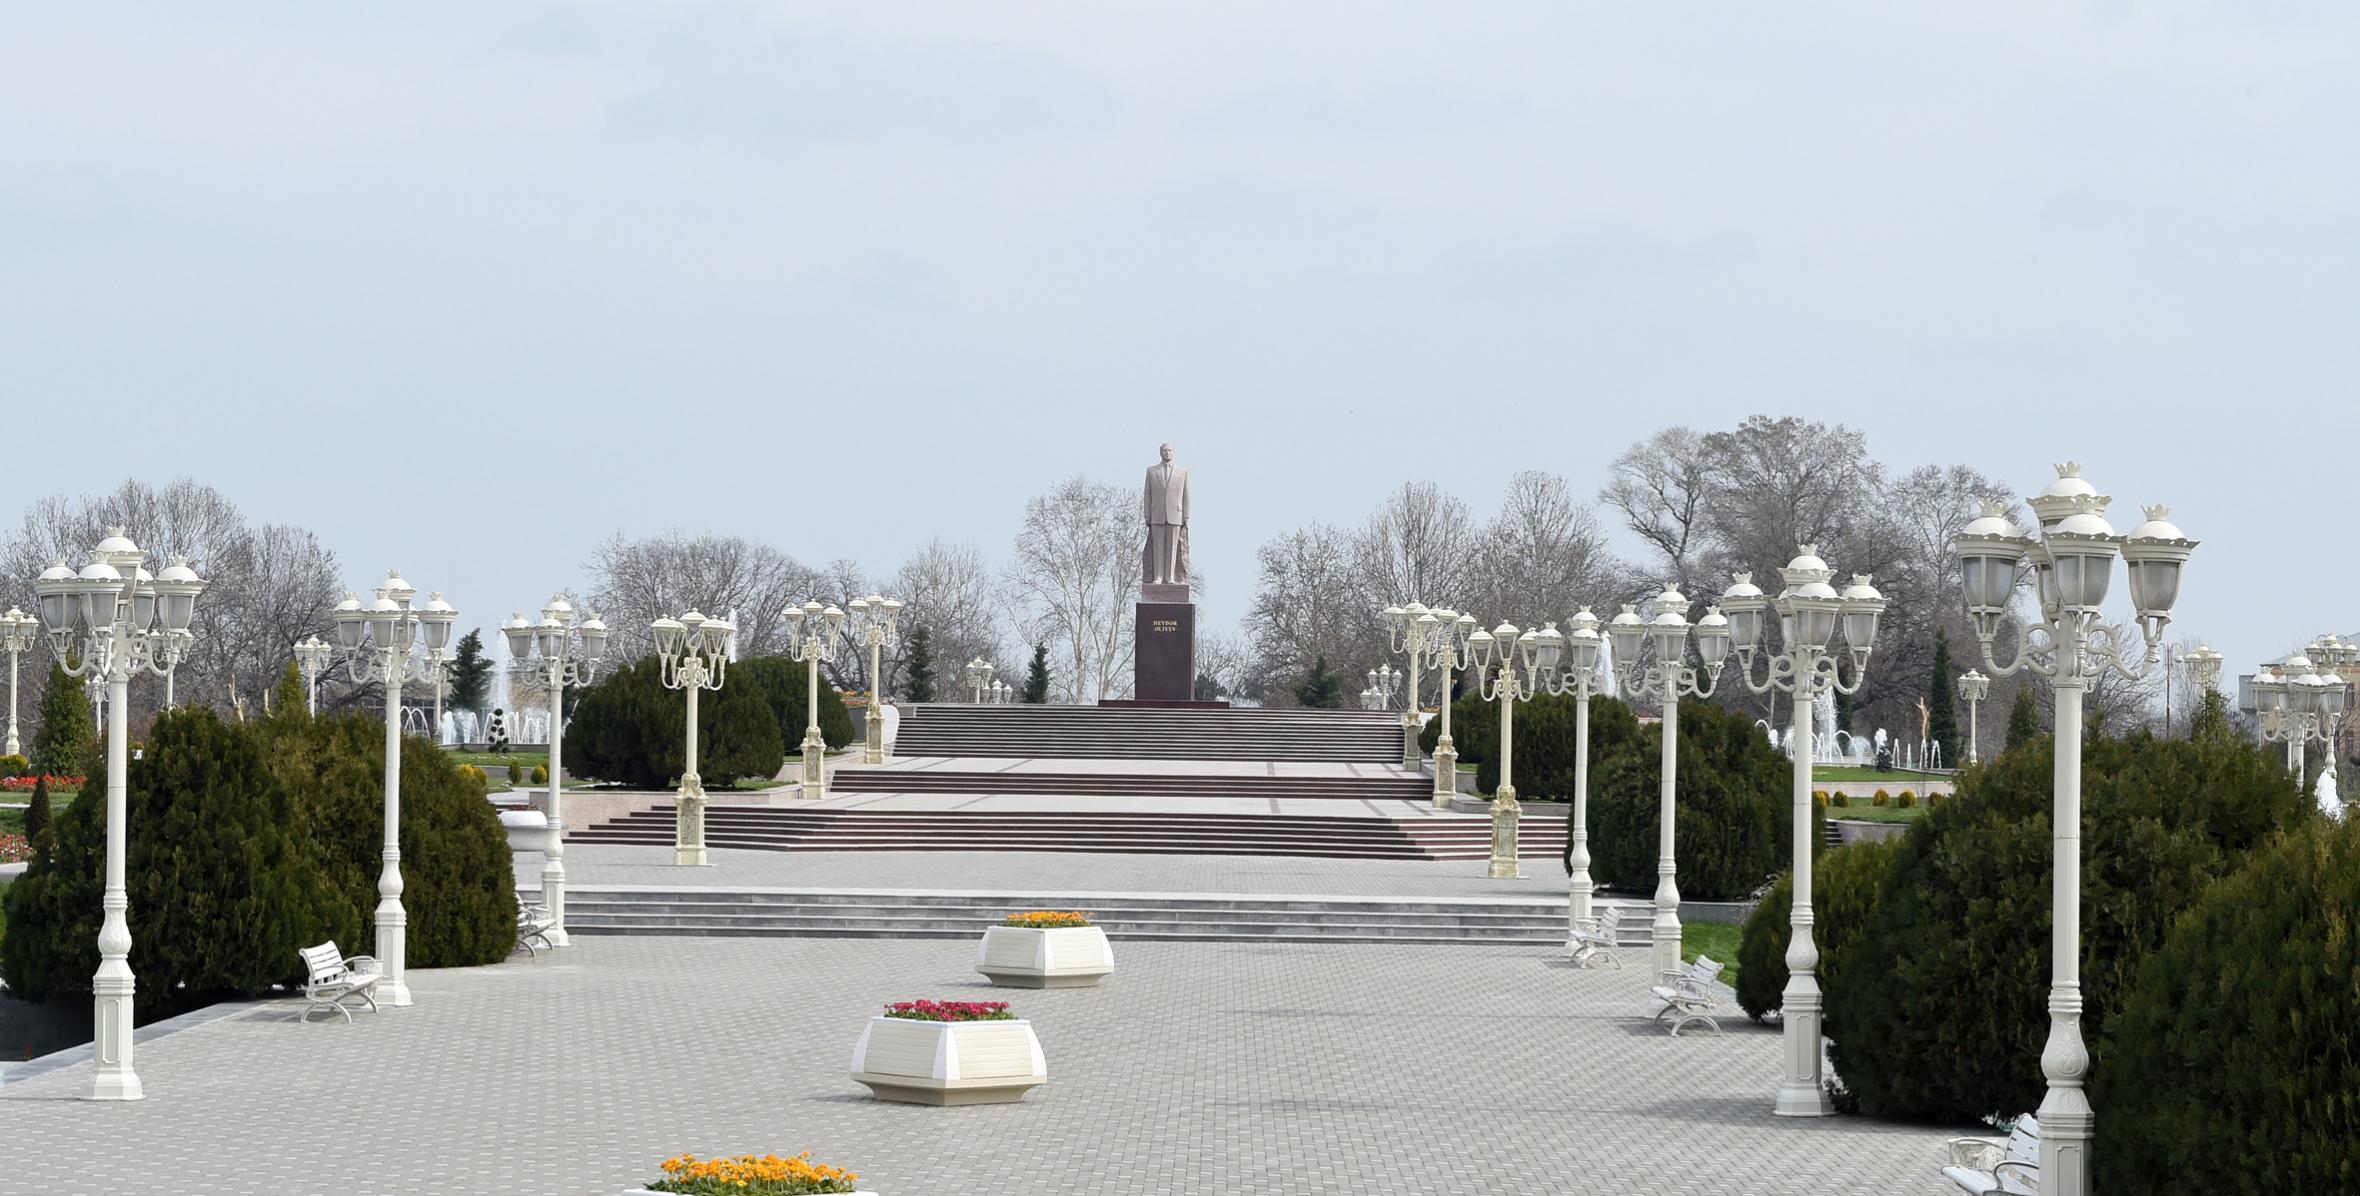 Ilham Aliyev visited a statue of national leader Heydar Aliyev in Barda